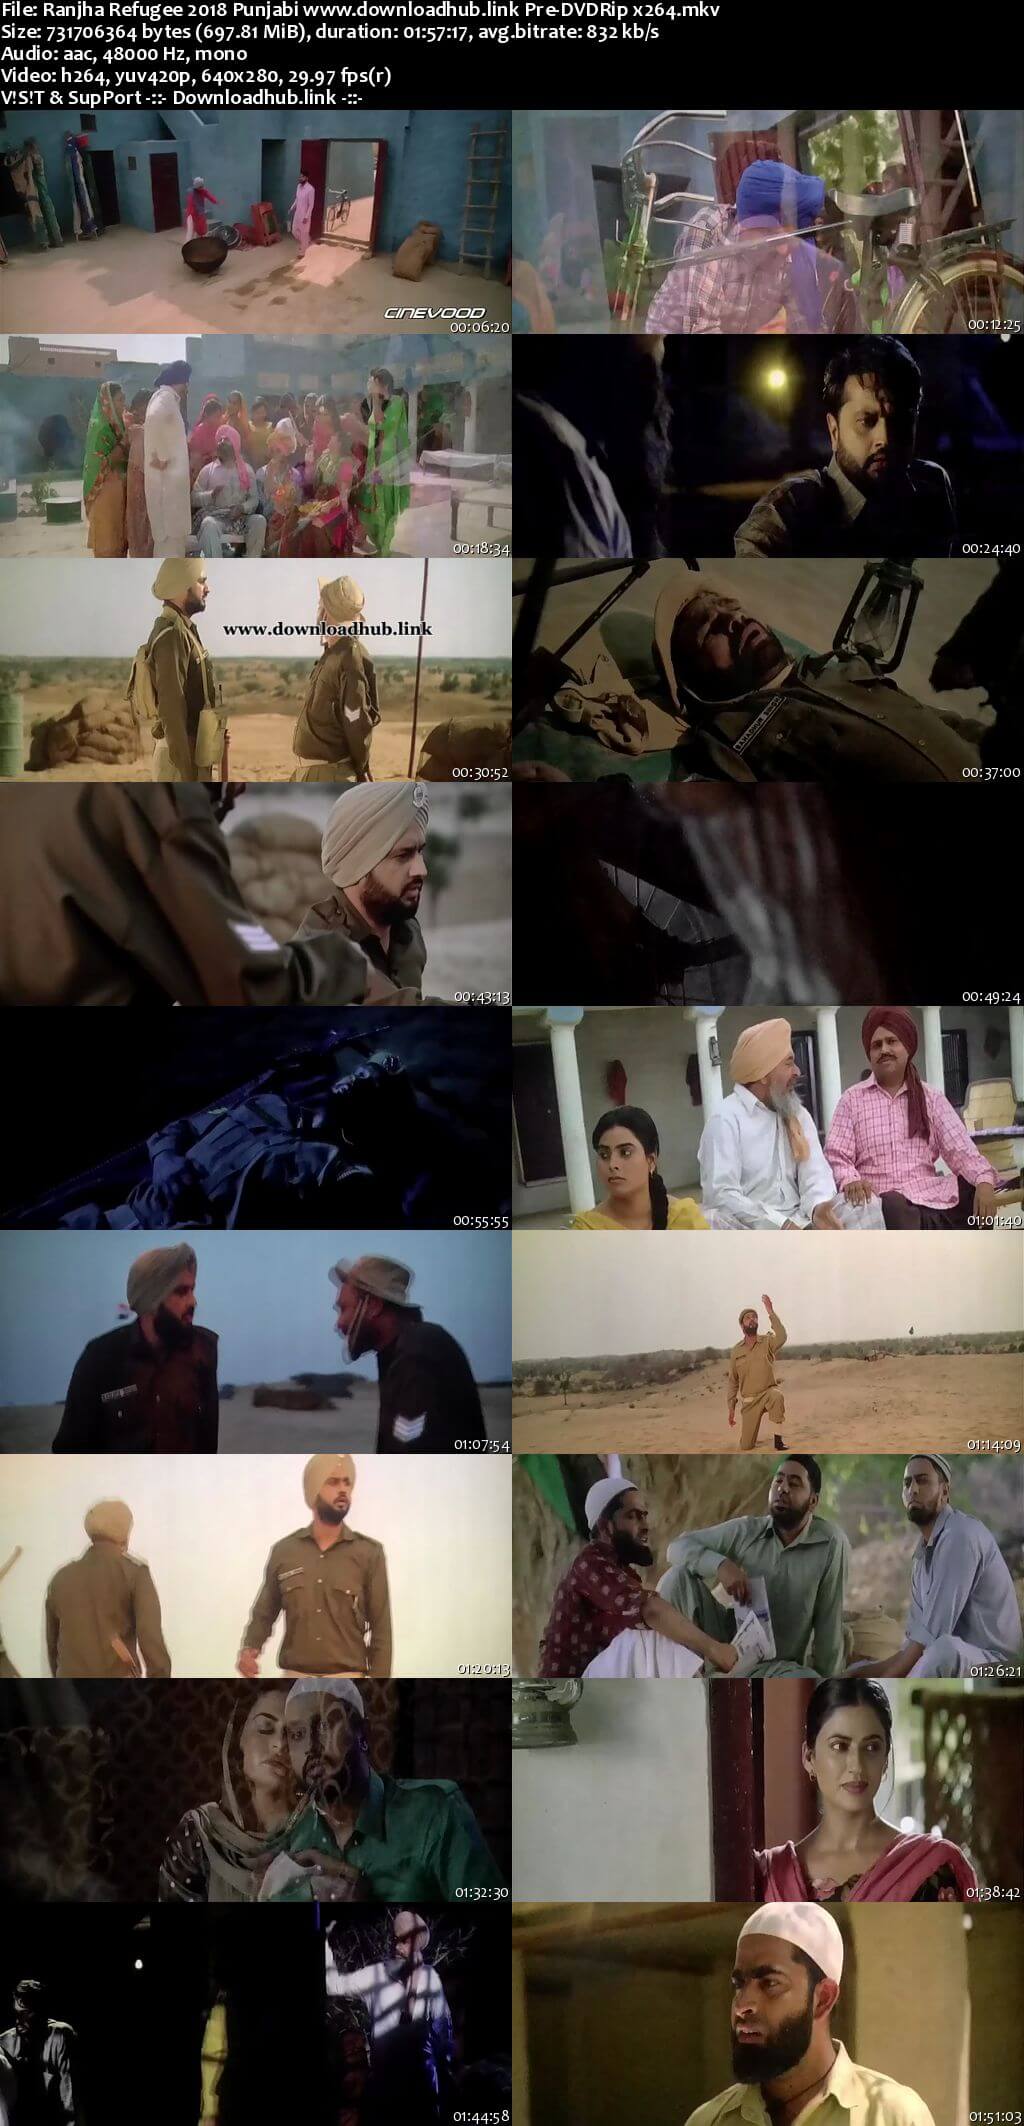 Ranjha Refugee 2018 Punjabi 700MB Pre-DVDRip x264